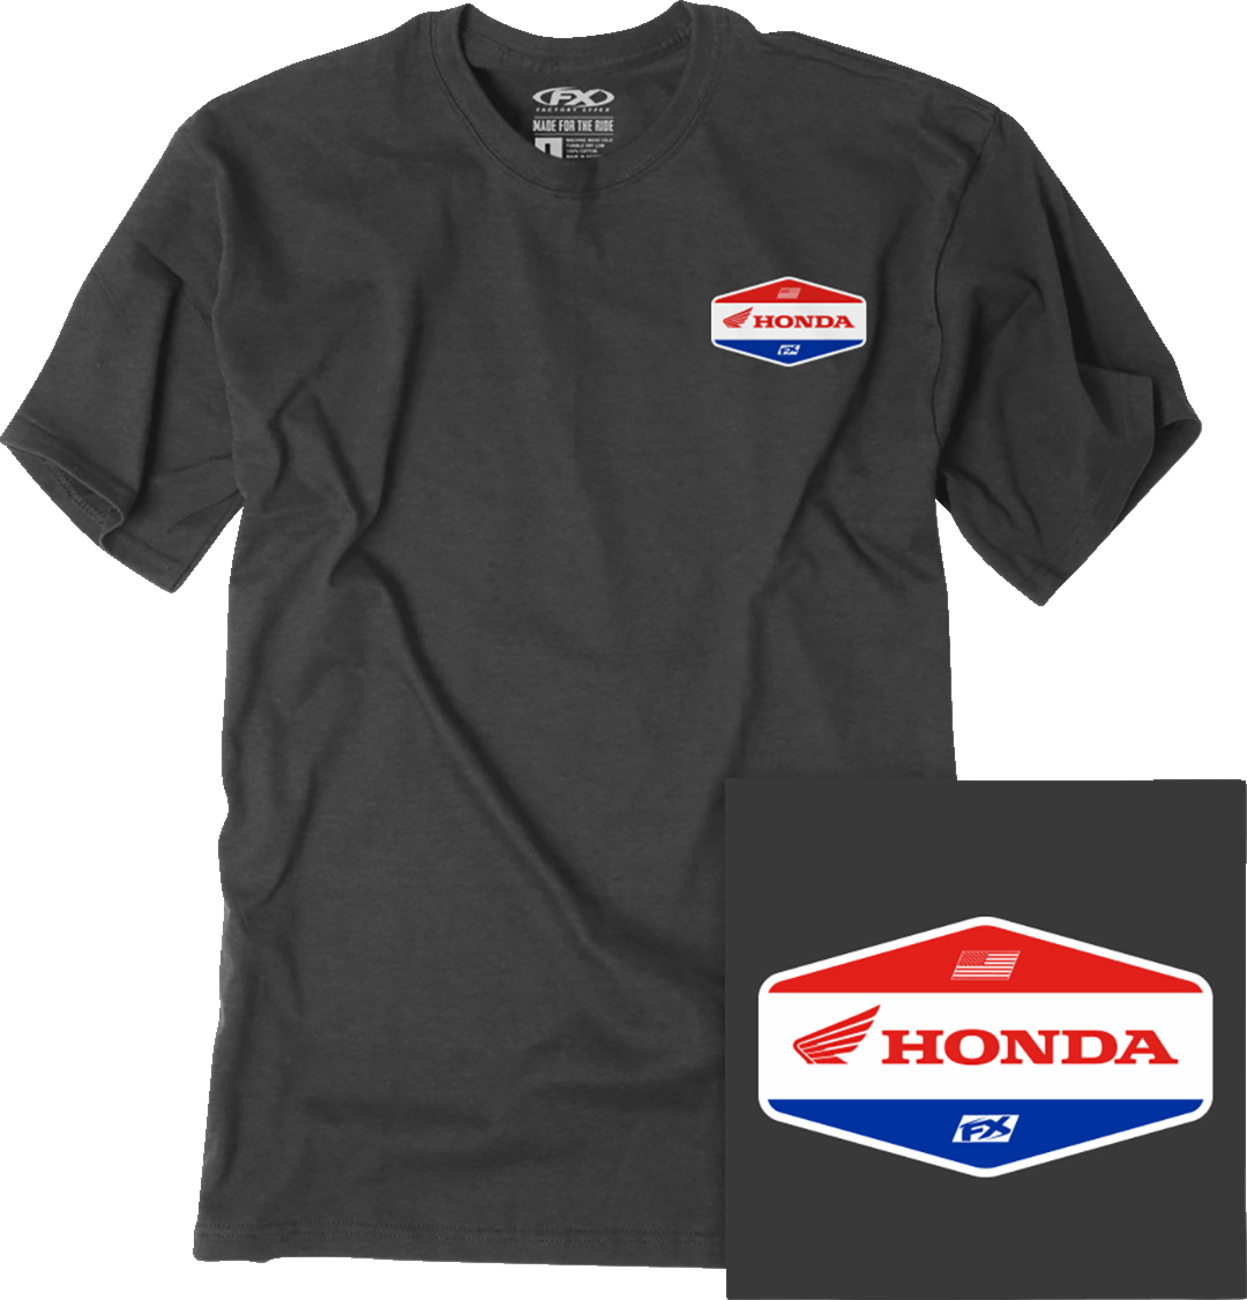 FACTORY EFFEX Honda Stadium T-Shirt - Heather Charcoal - Medium 27-87332